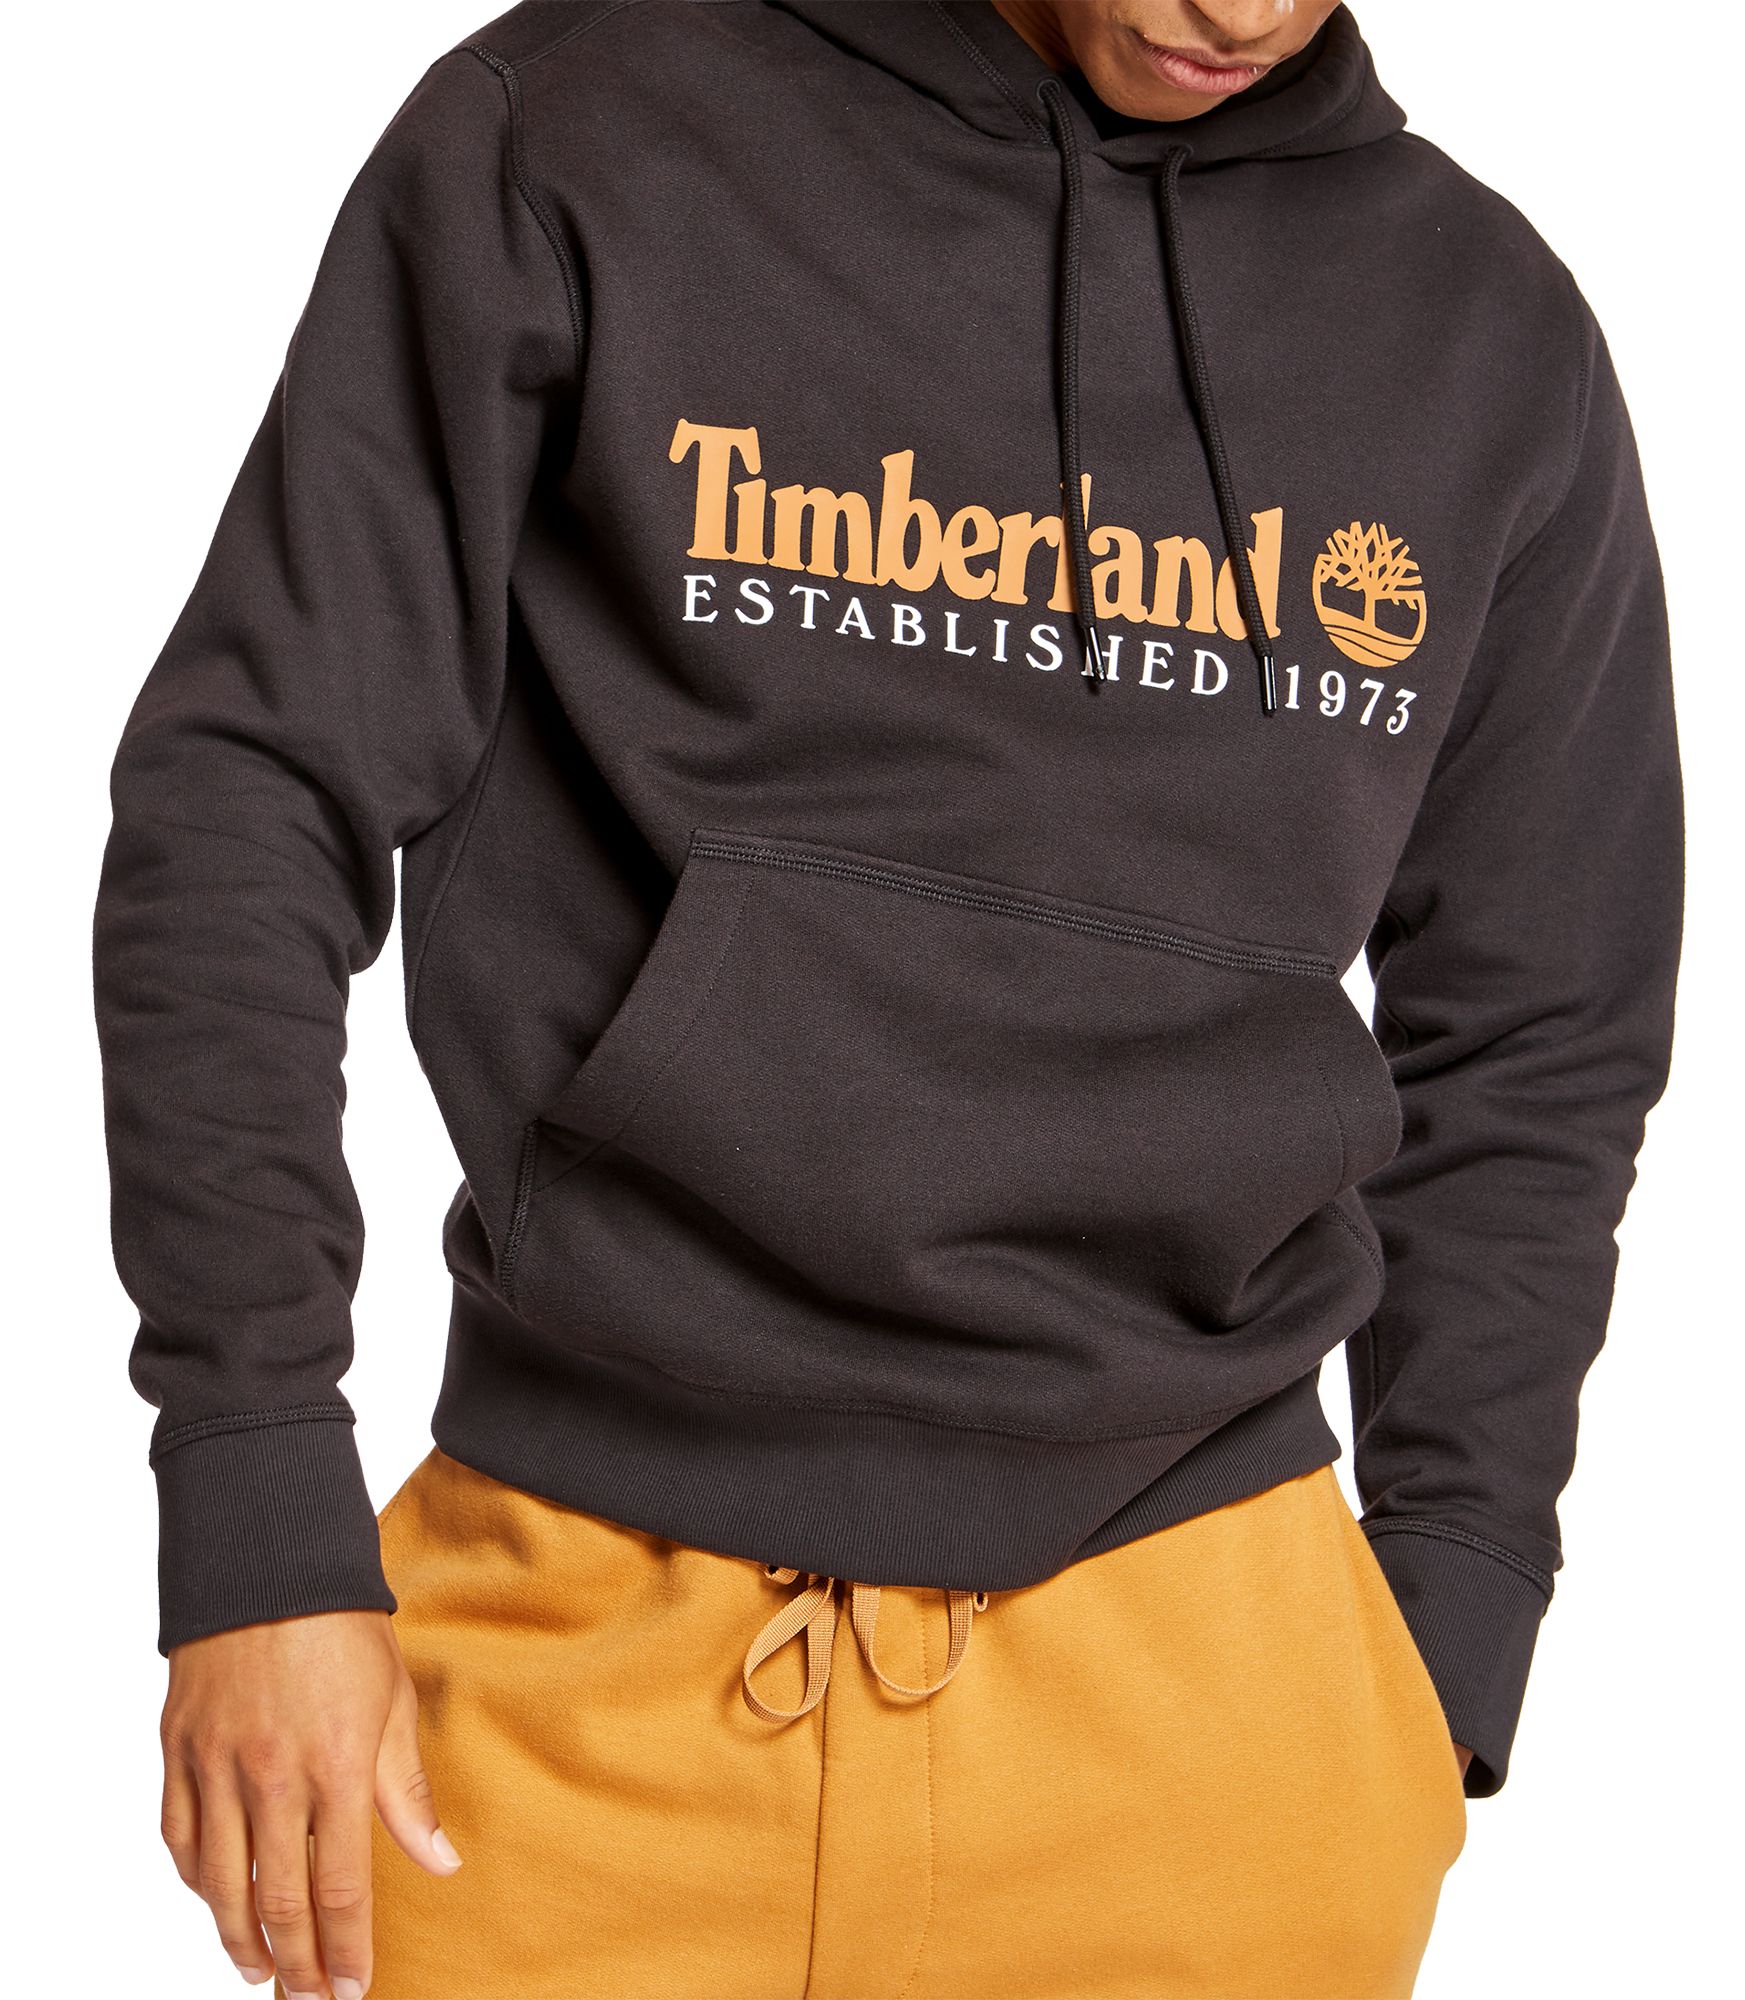 timberland established 1973 jacket